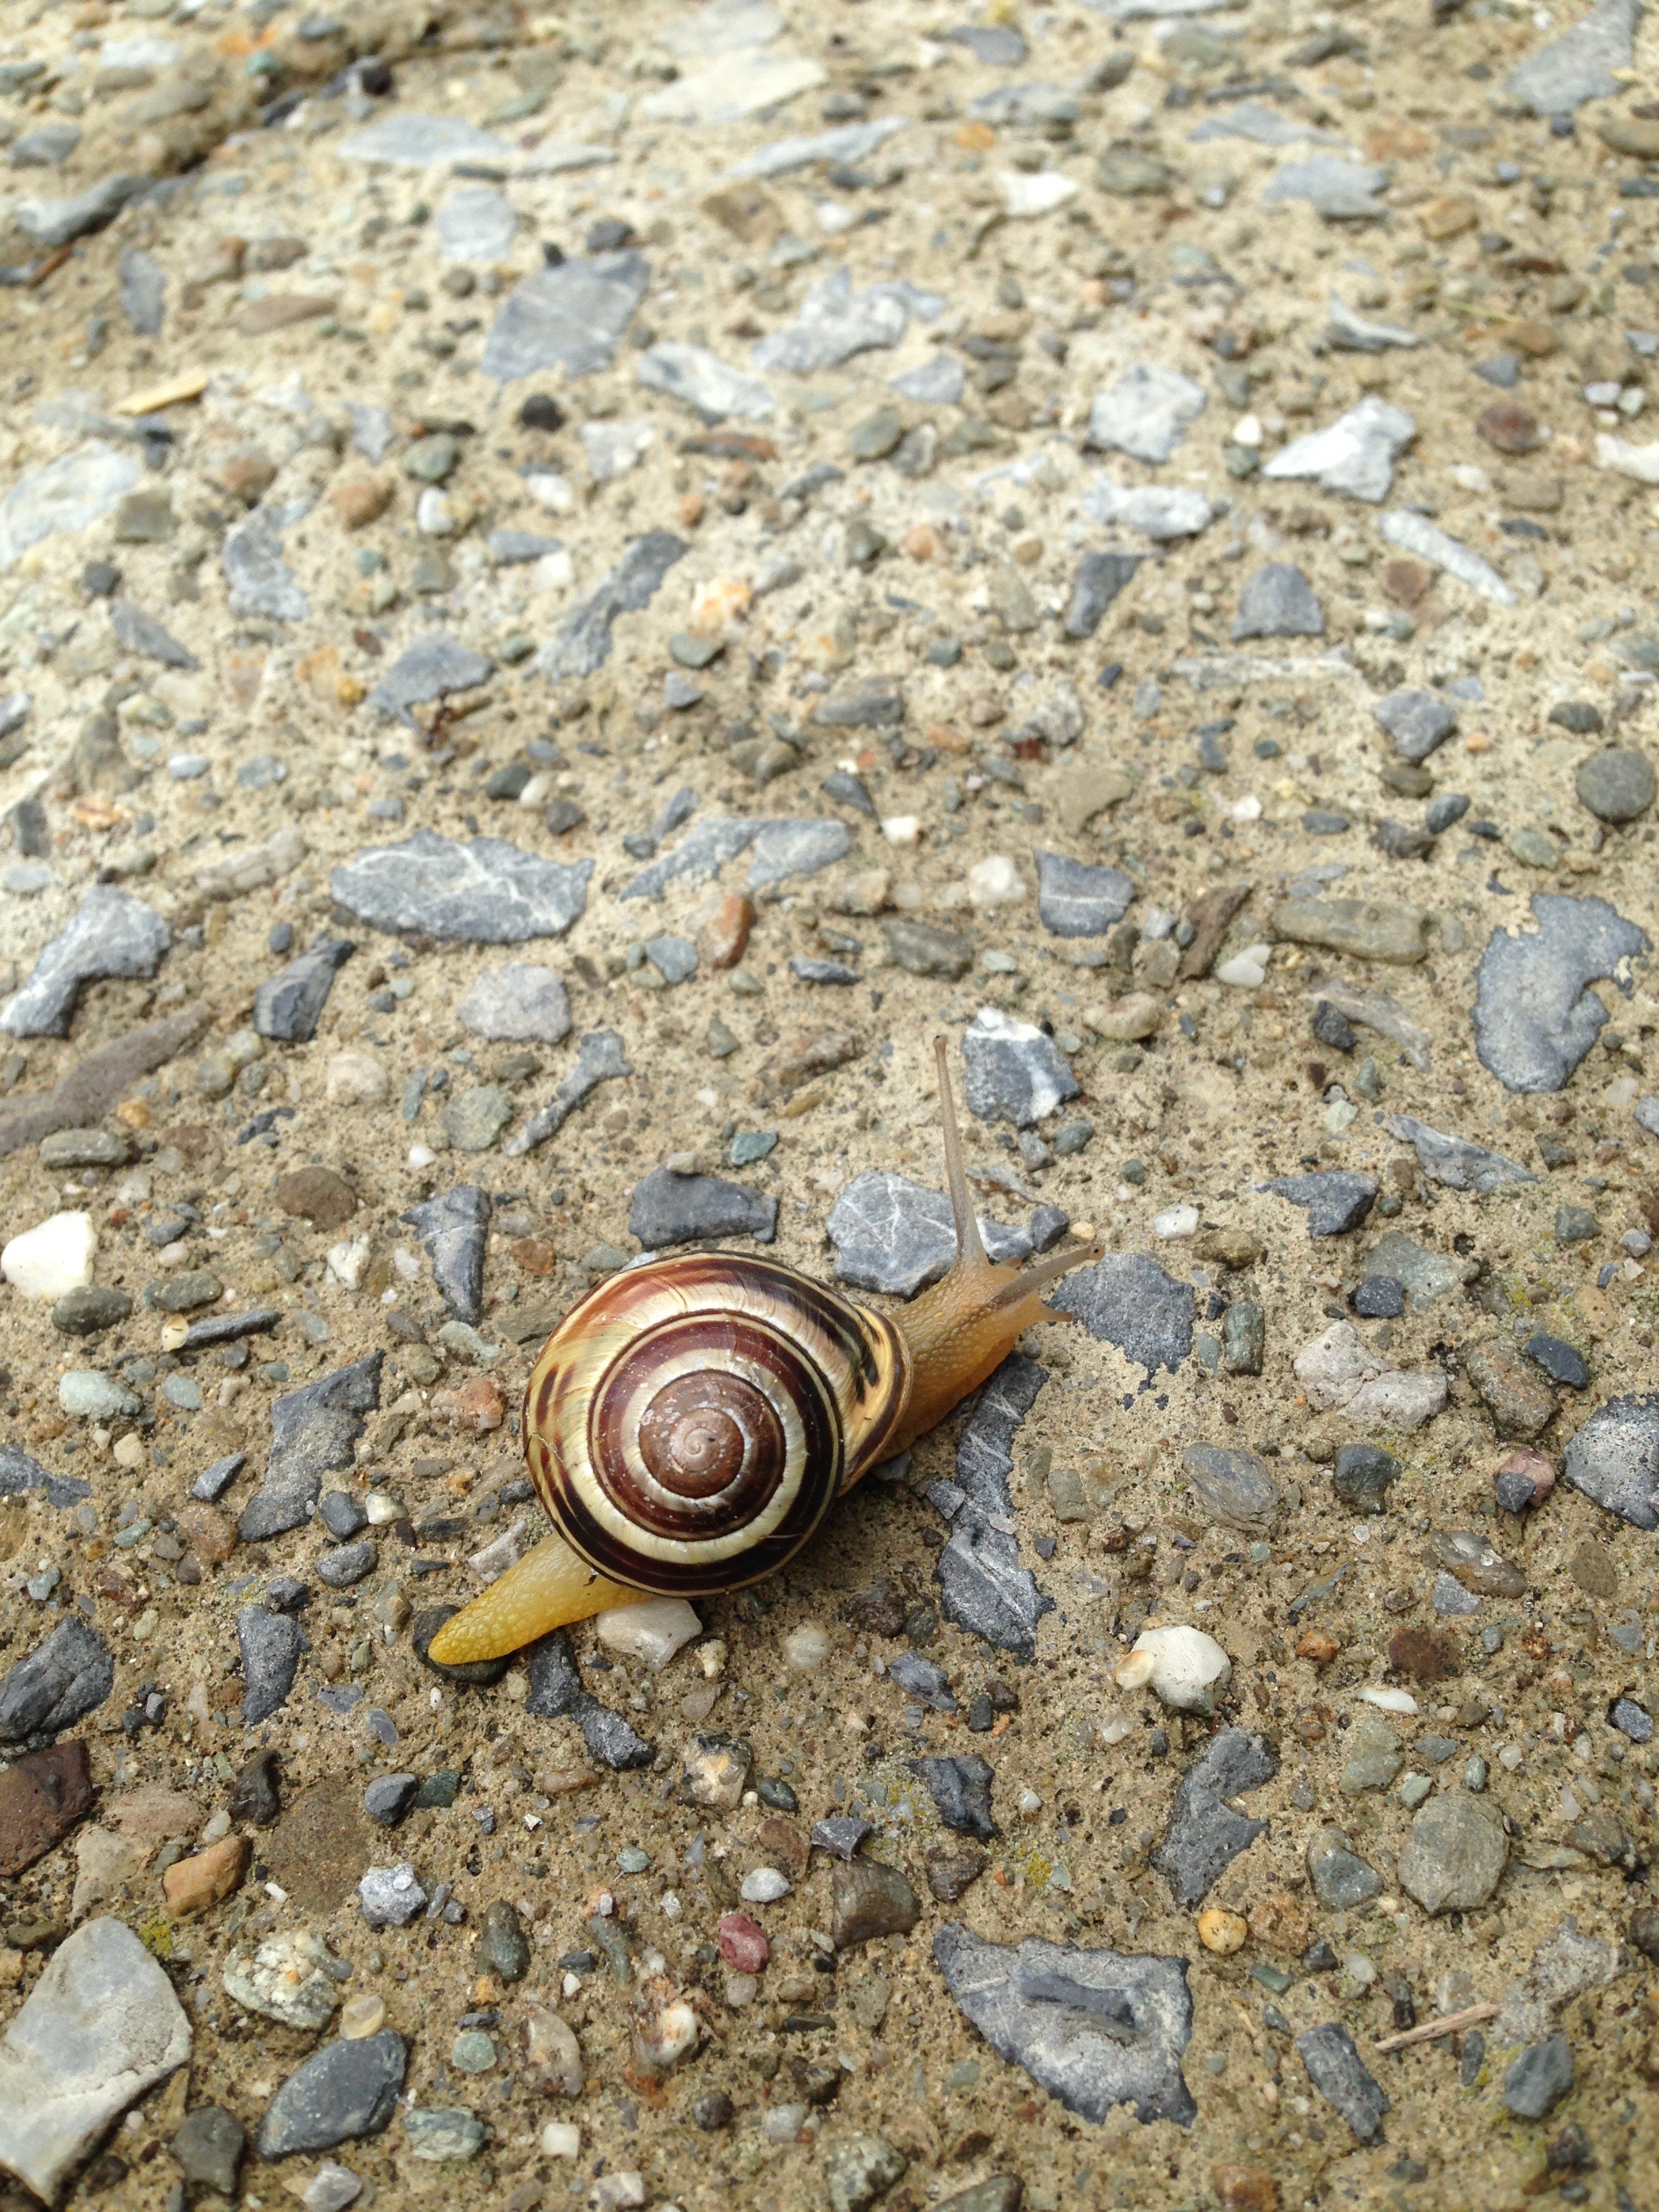 Perfect snail